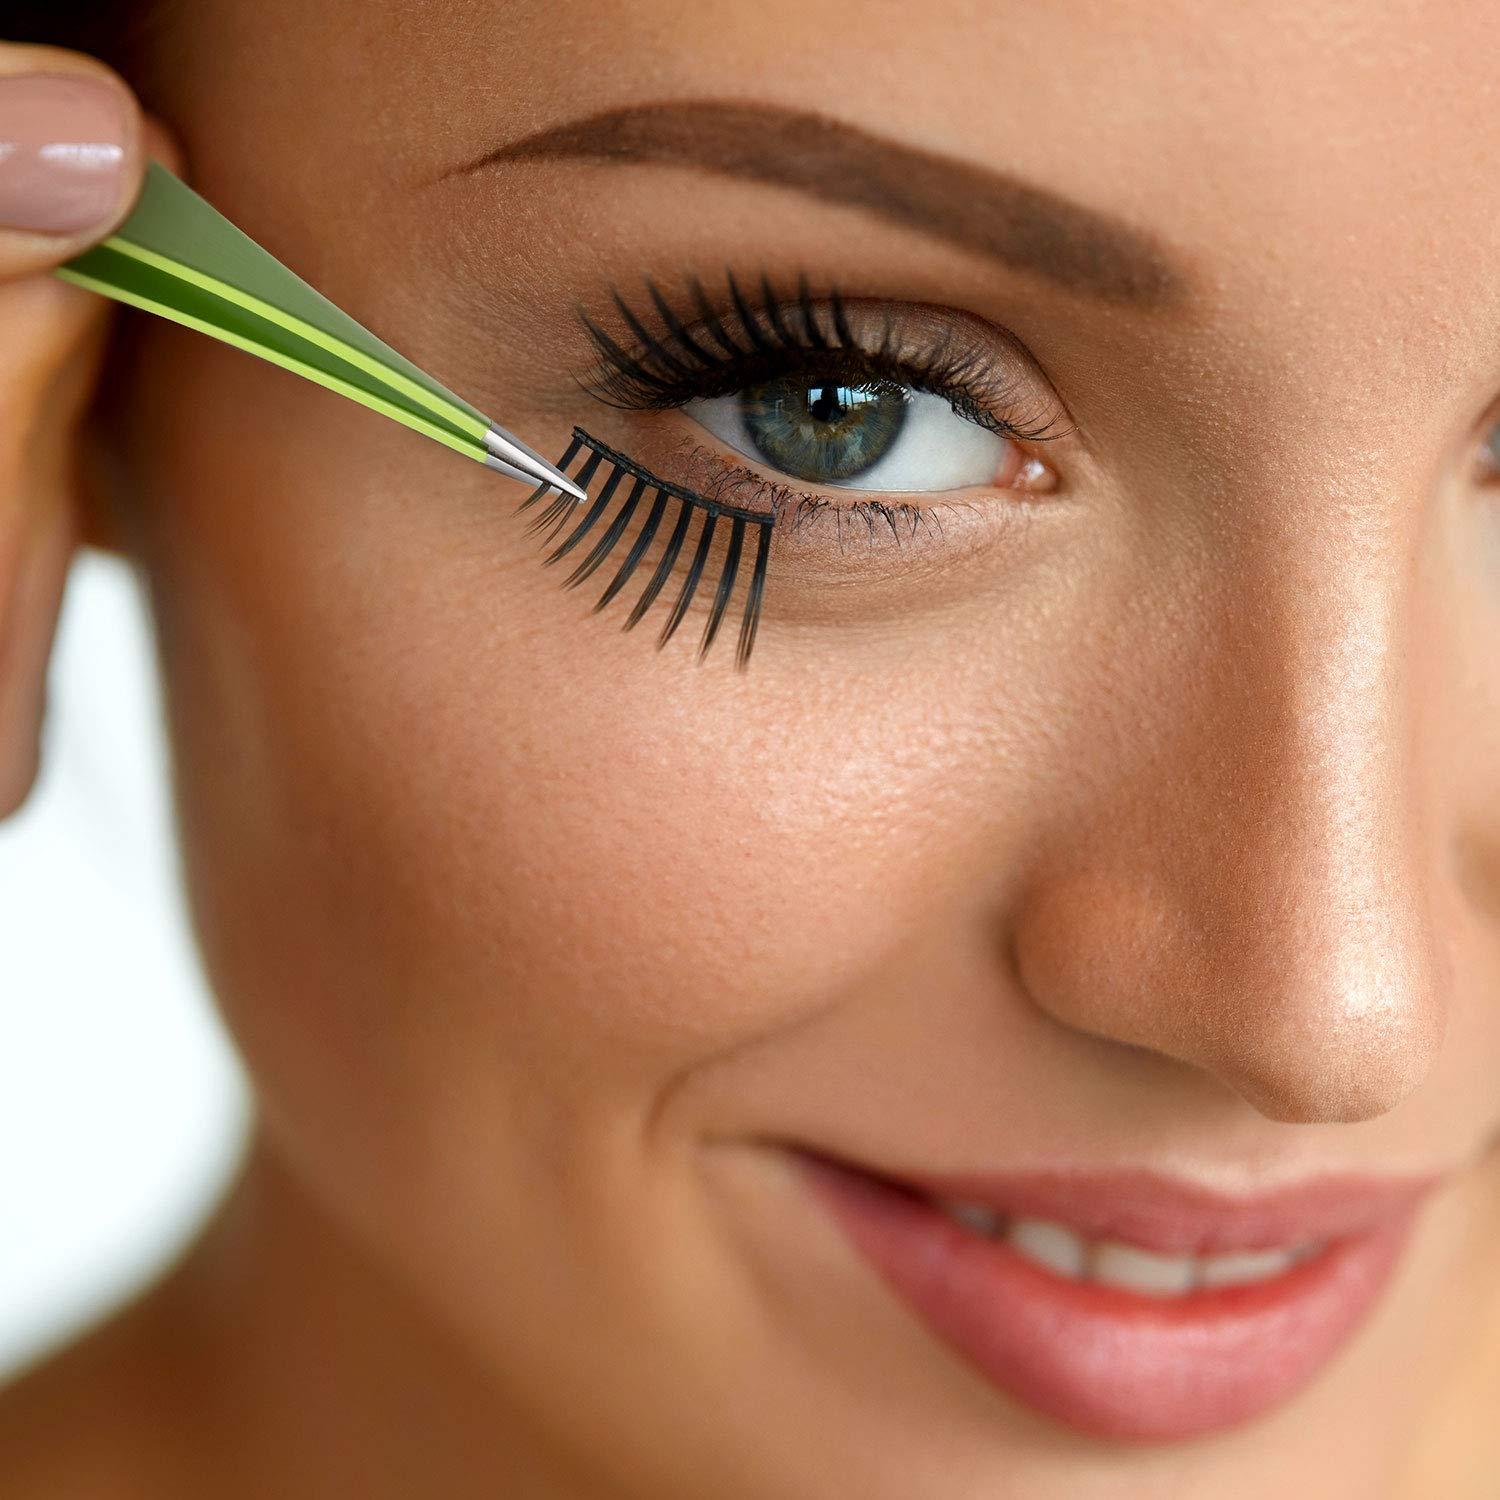 MR.GREEN Ingrown Hair Tweezers Needle Nose Pointed Tips Eyebrows